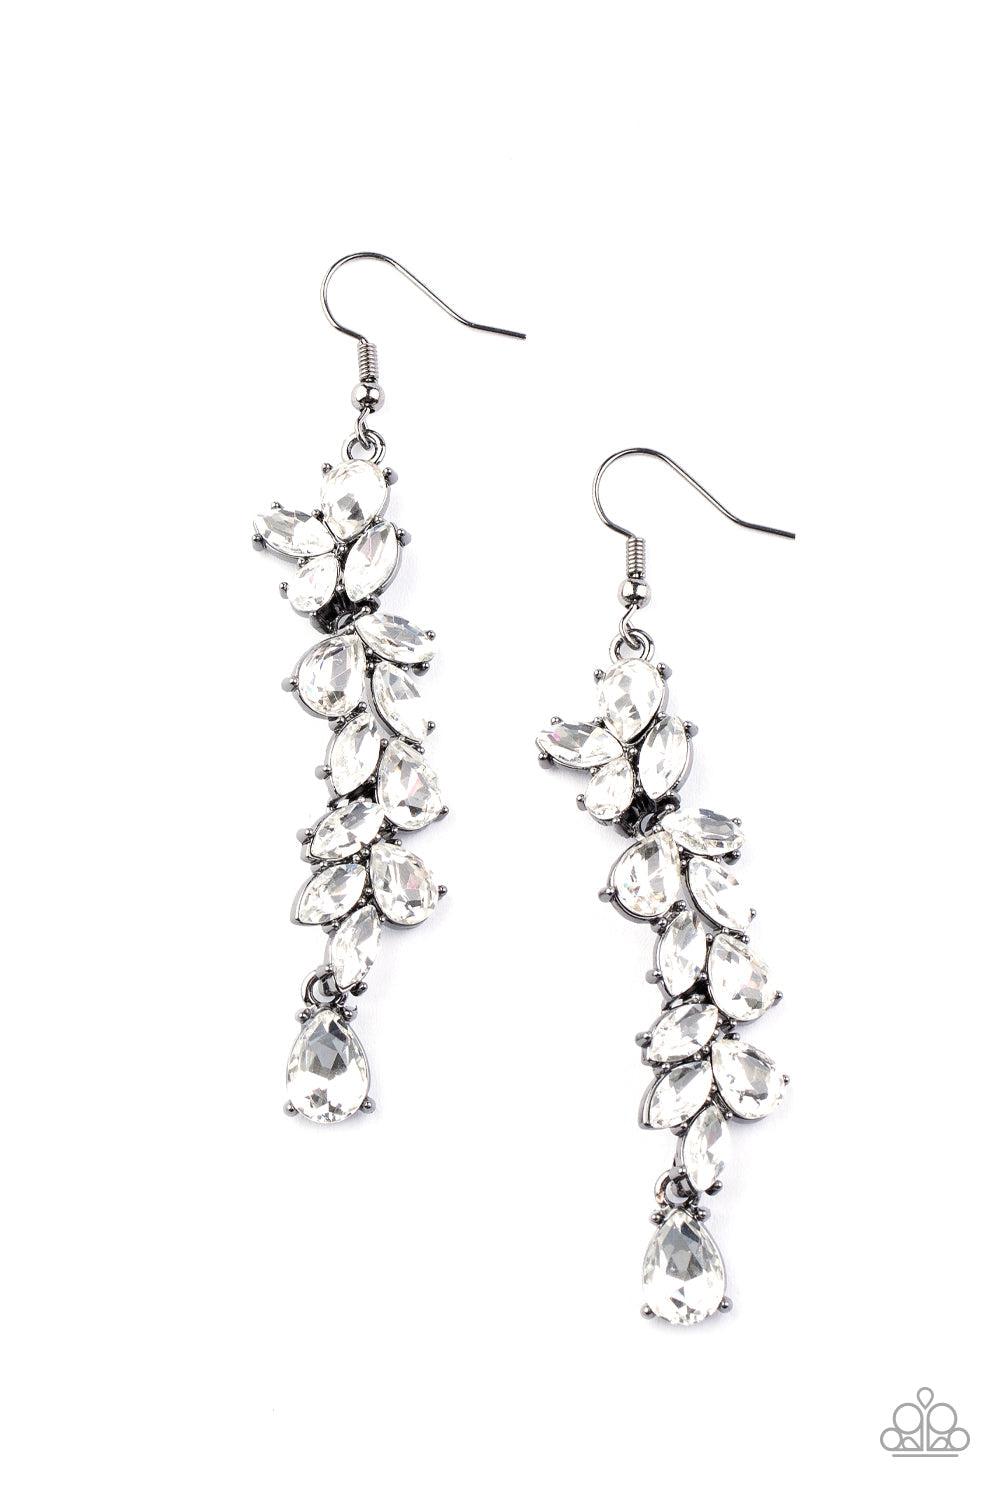 Unlimited Luster Gunmetal Black & White Rhinestone Earrings - Paparazzi Accessories- lightbox - CarasShop.com - $5 Jewelry by Cara Jewels